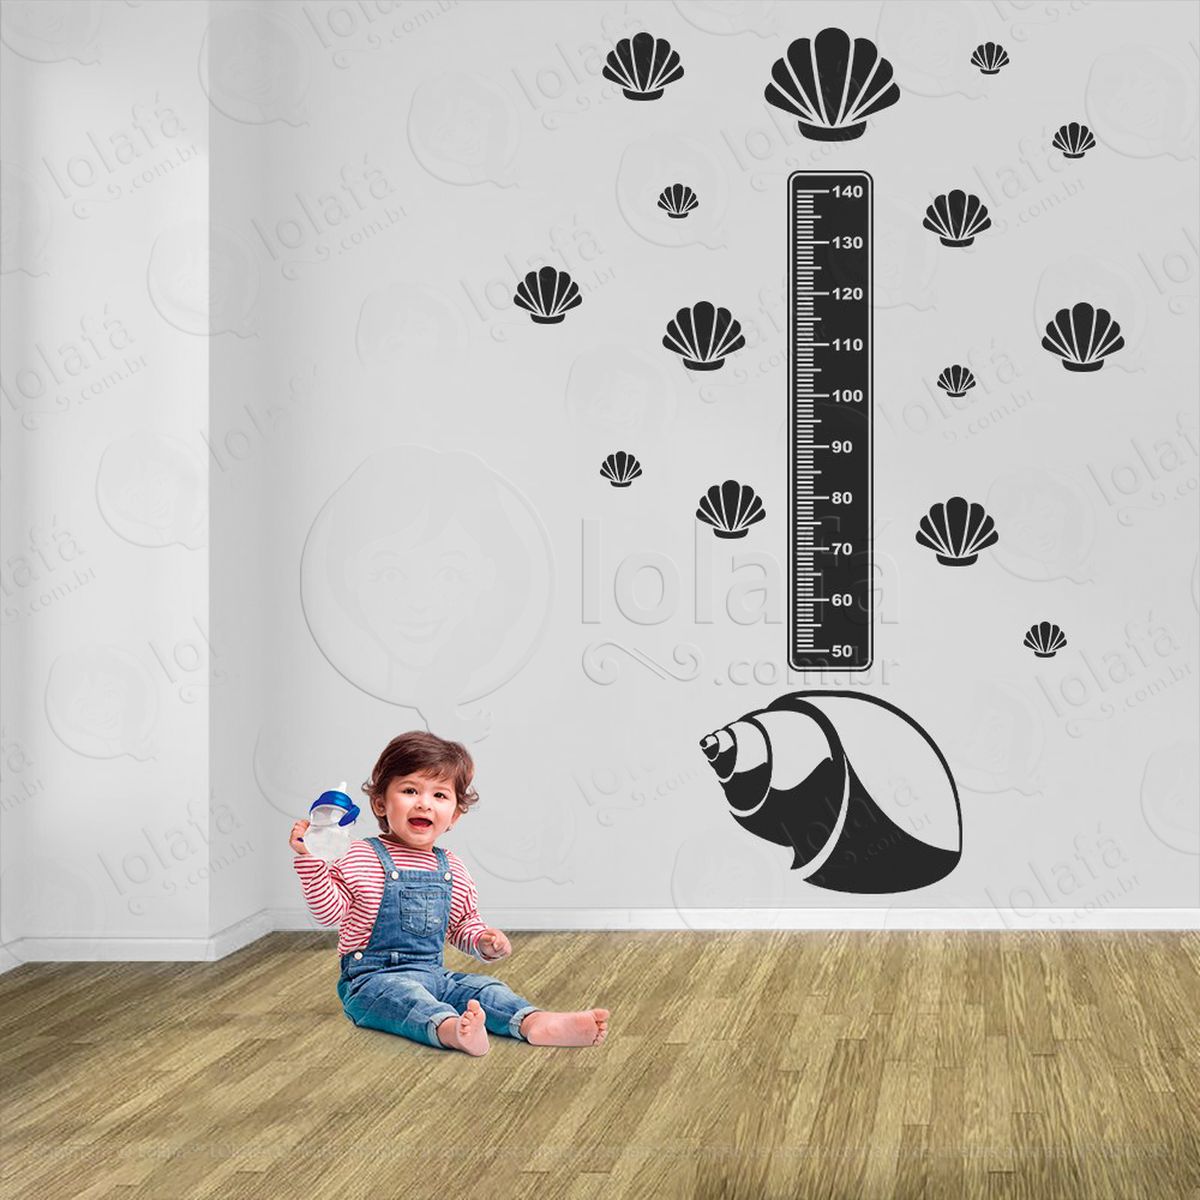 concha e conchas adesivo régua de crescimento infantil, medidor de altura para quarto, porta e parede - mod:145